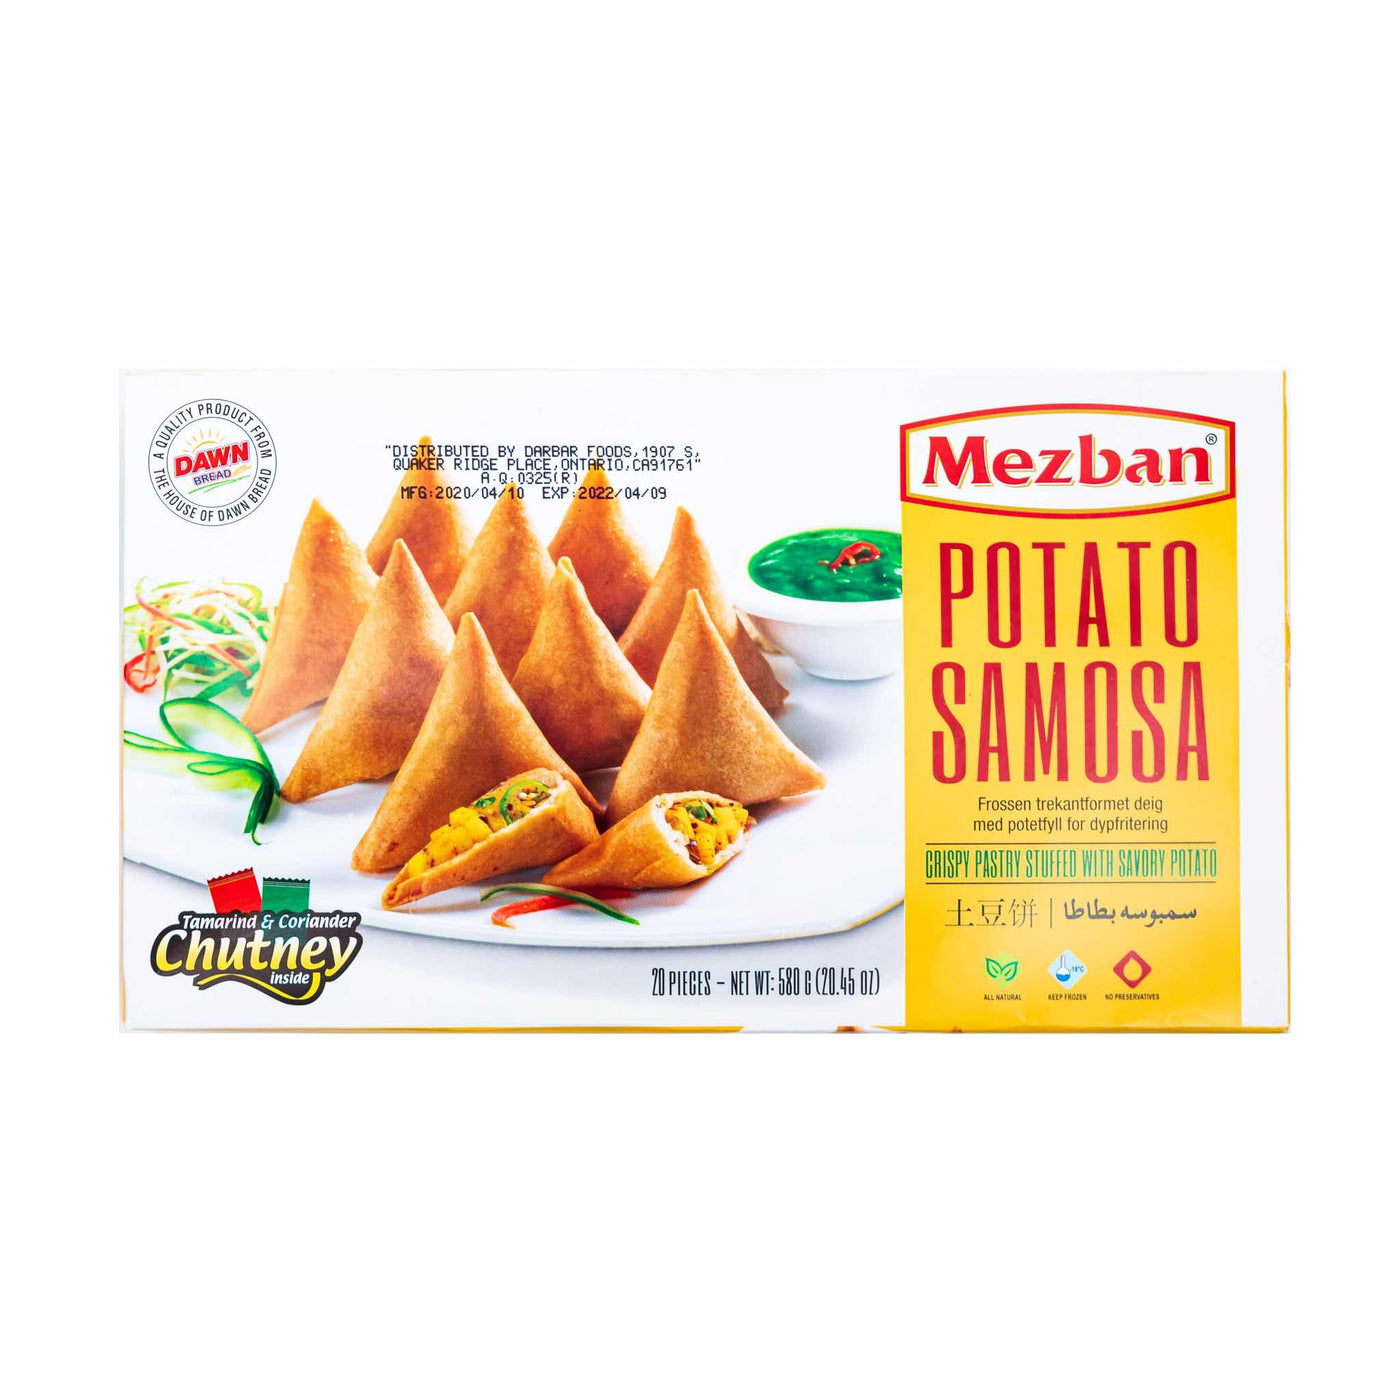 Mezban Potato Samosa – One Stop Halal